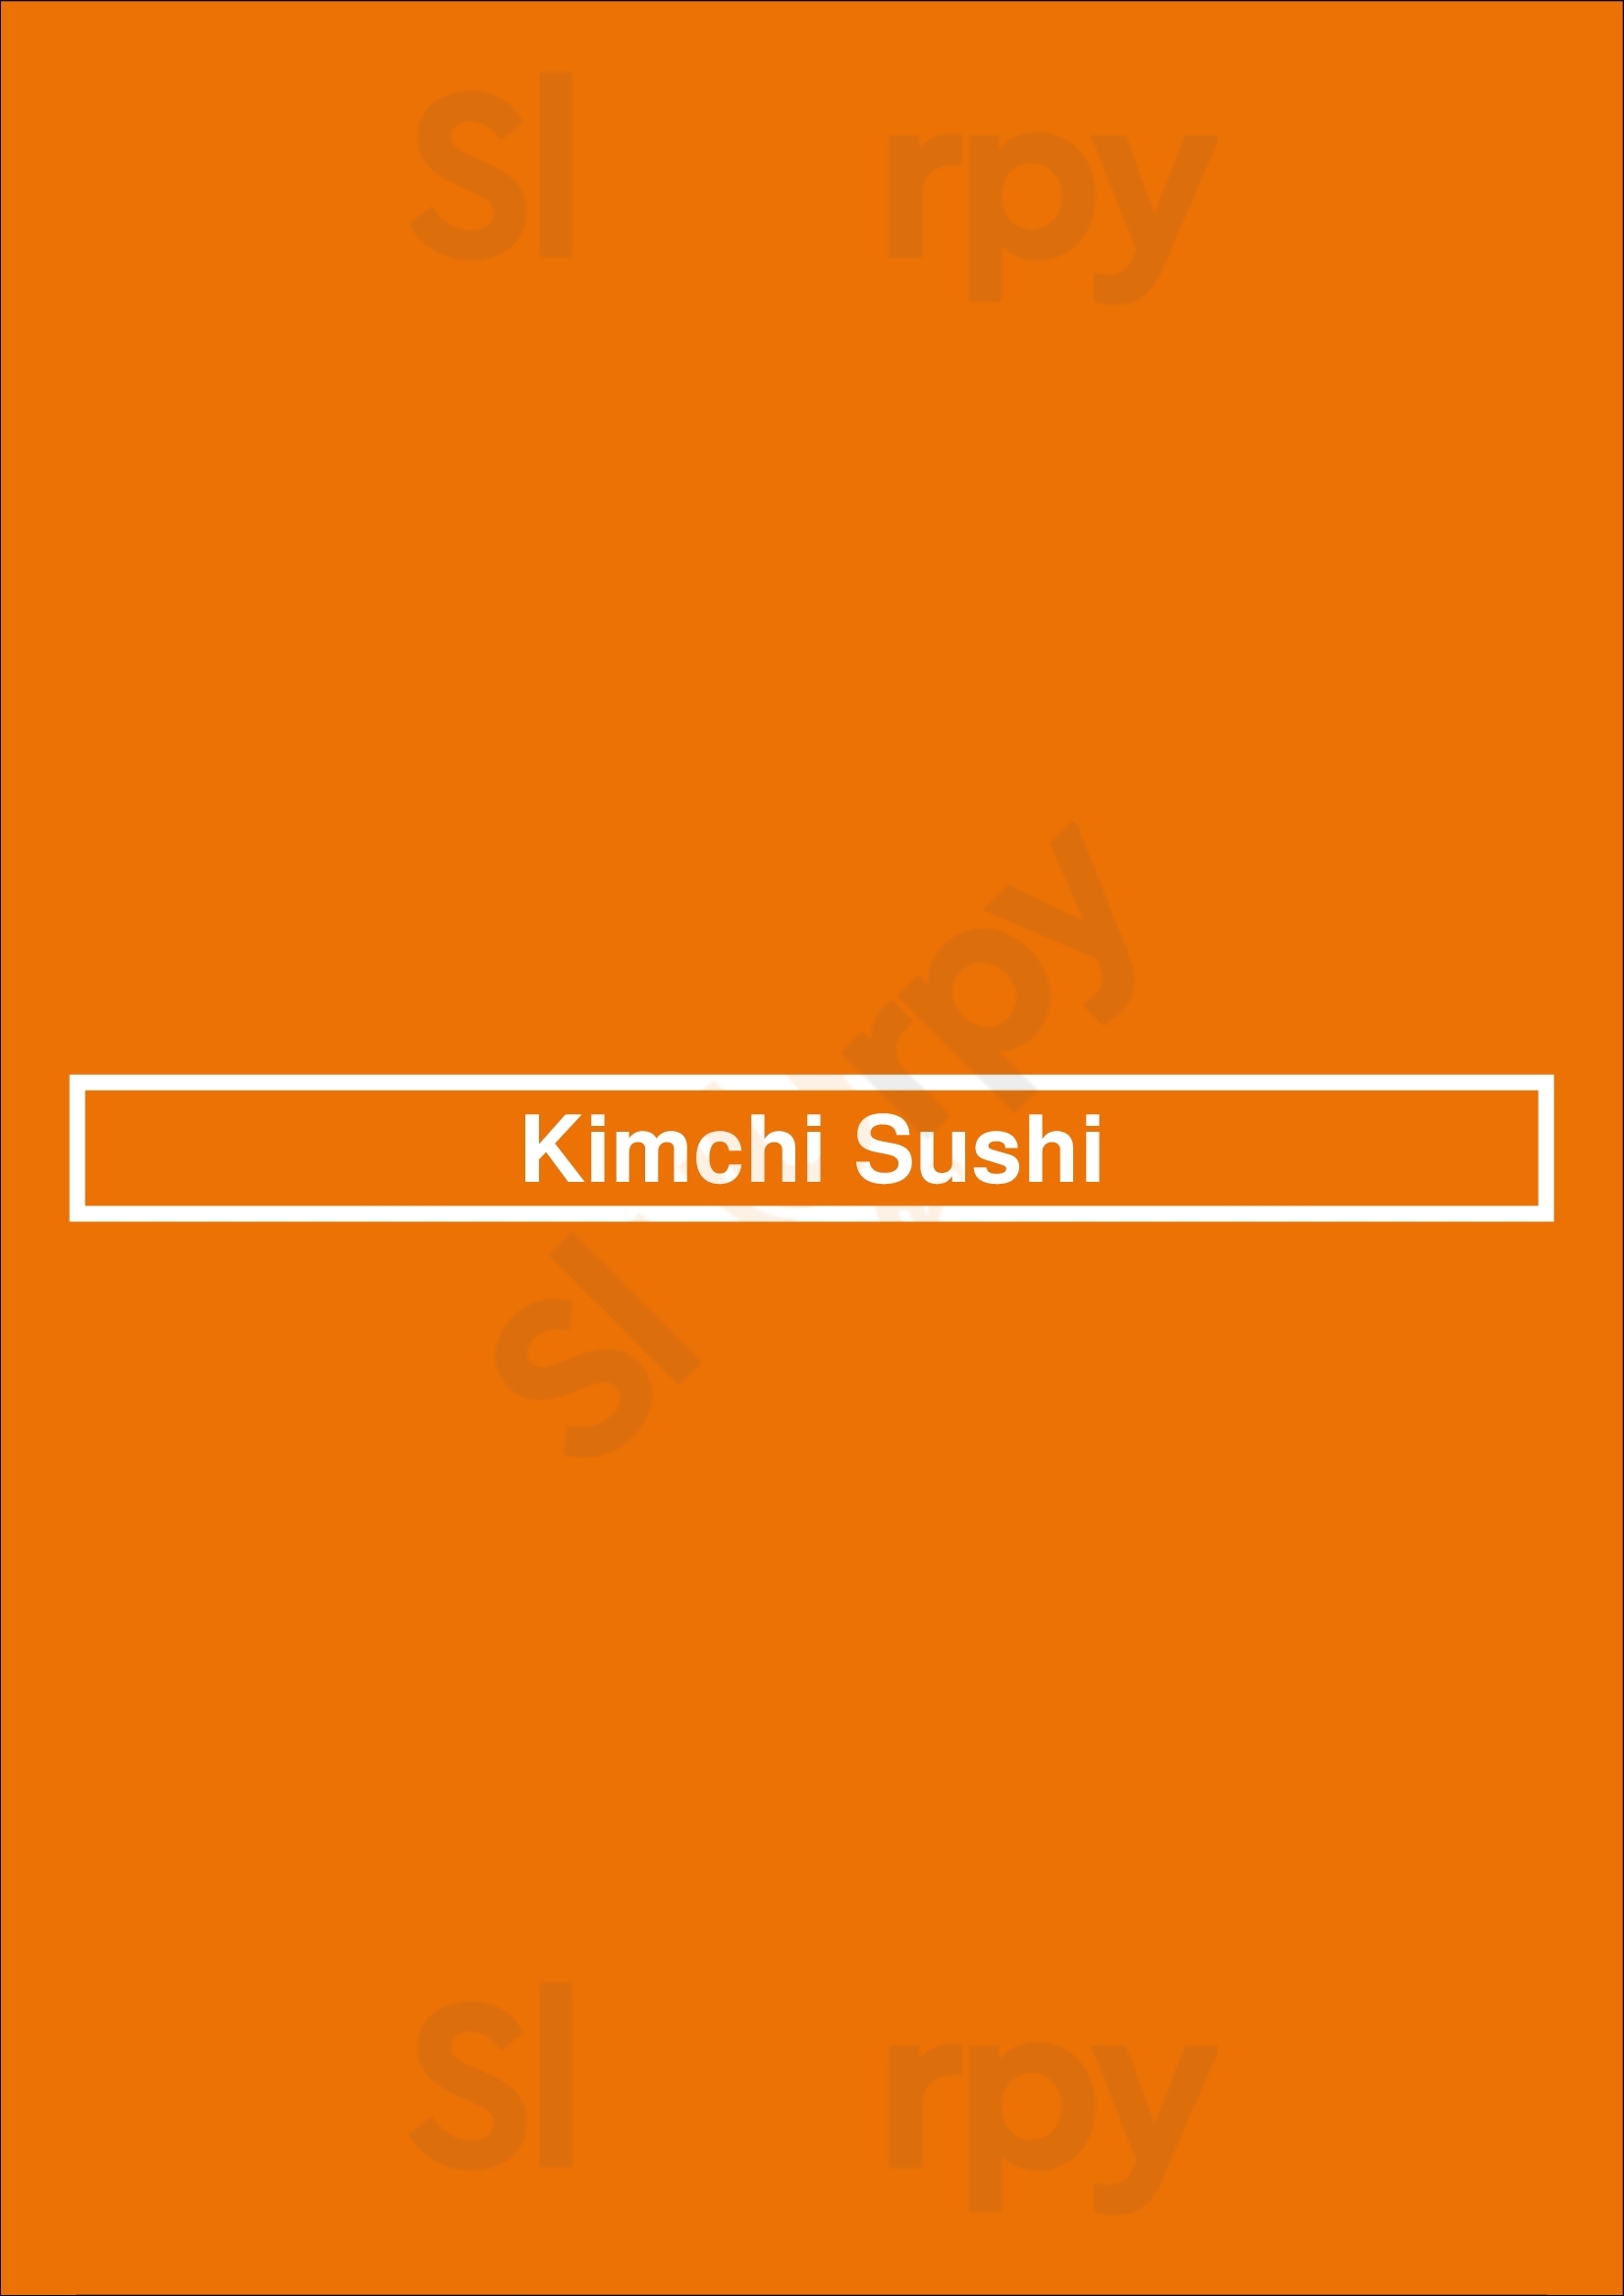 Kimchi Sushi Winnipeg Menu - 1